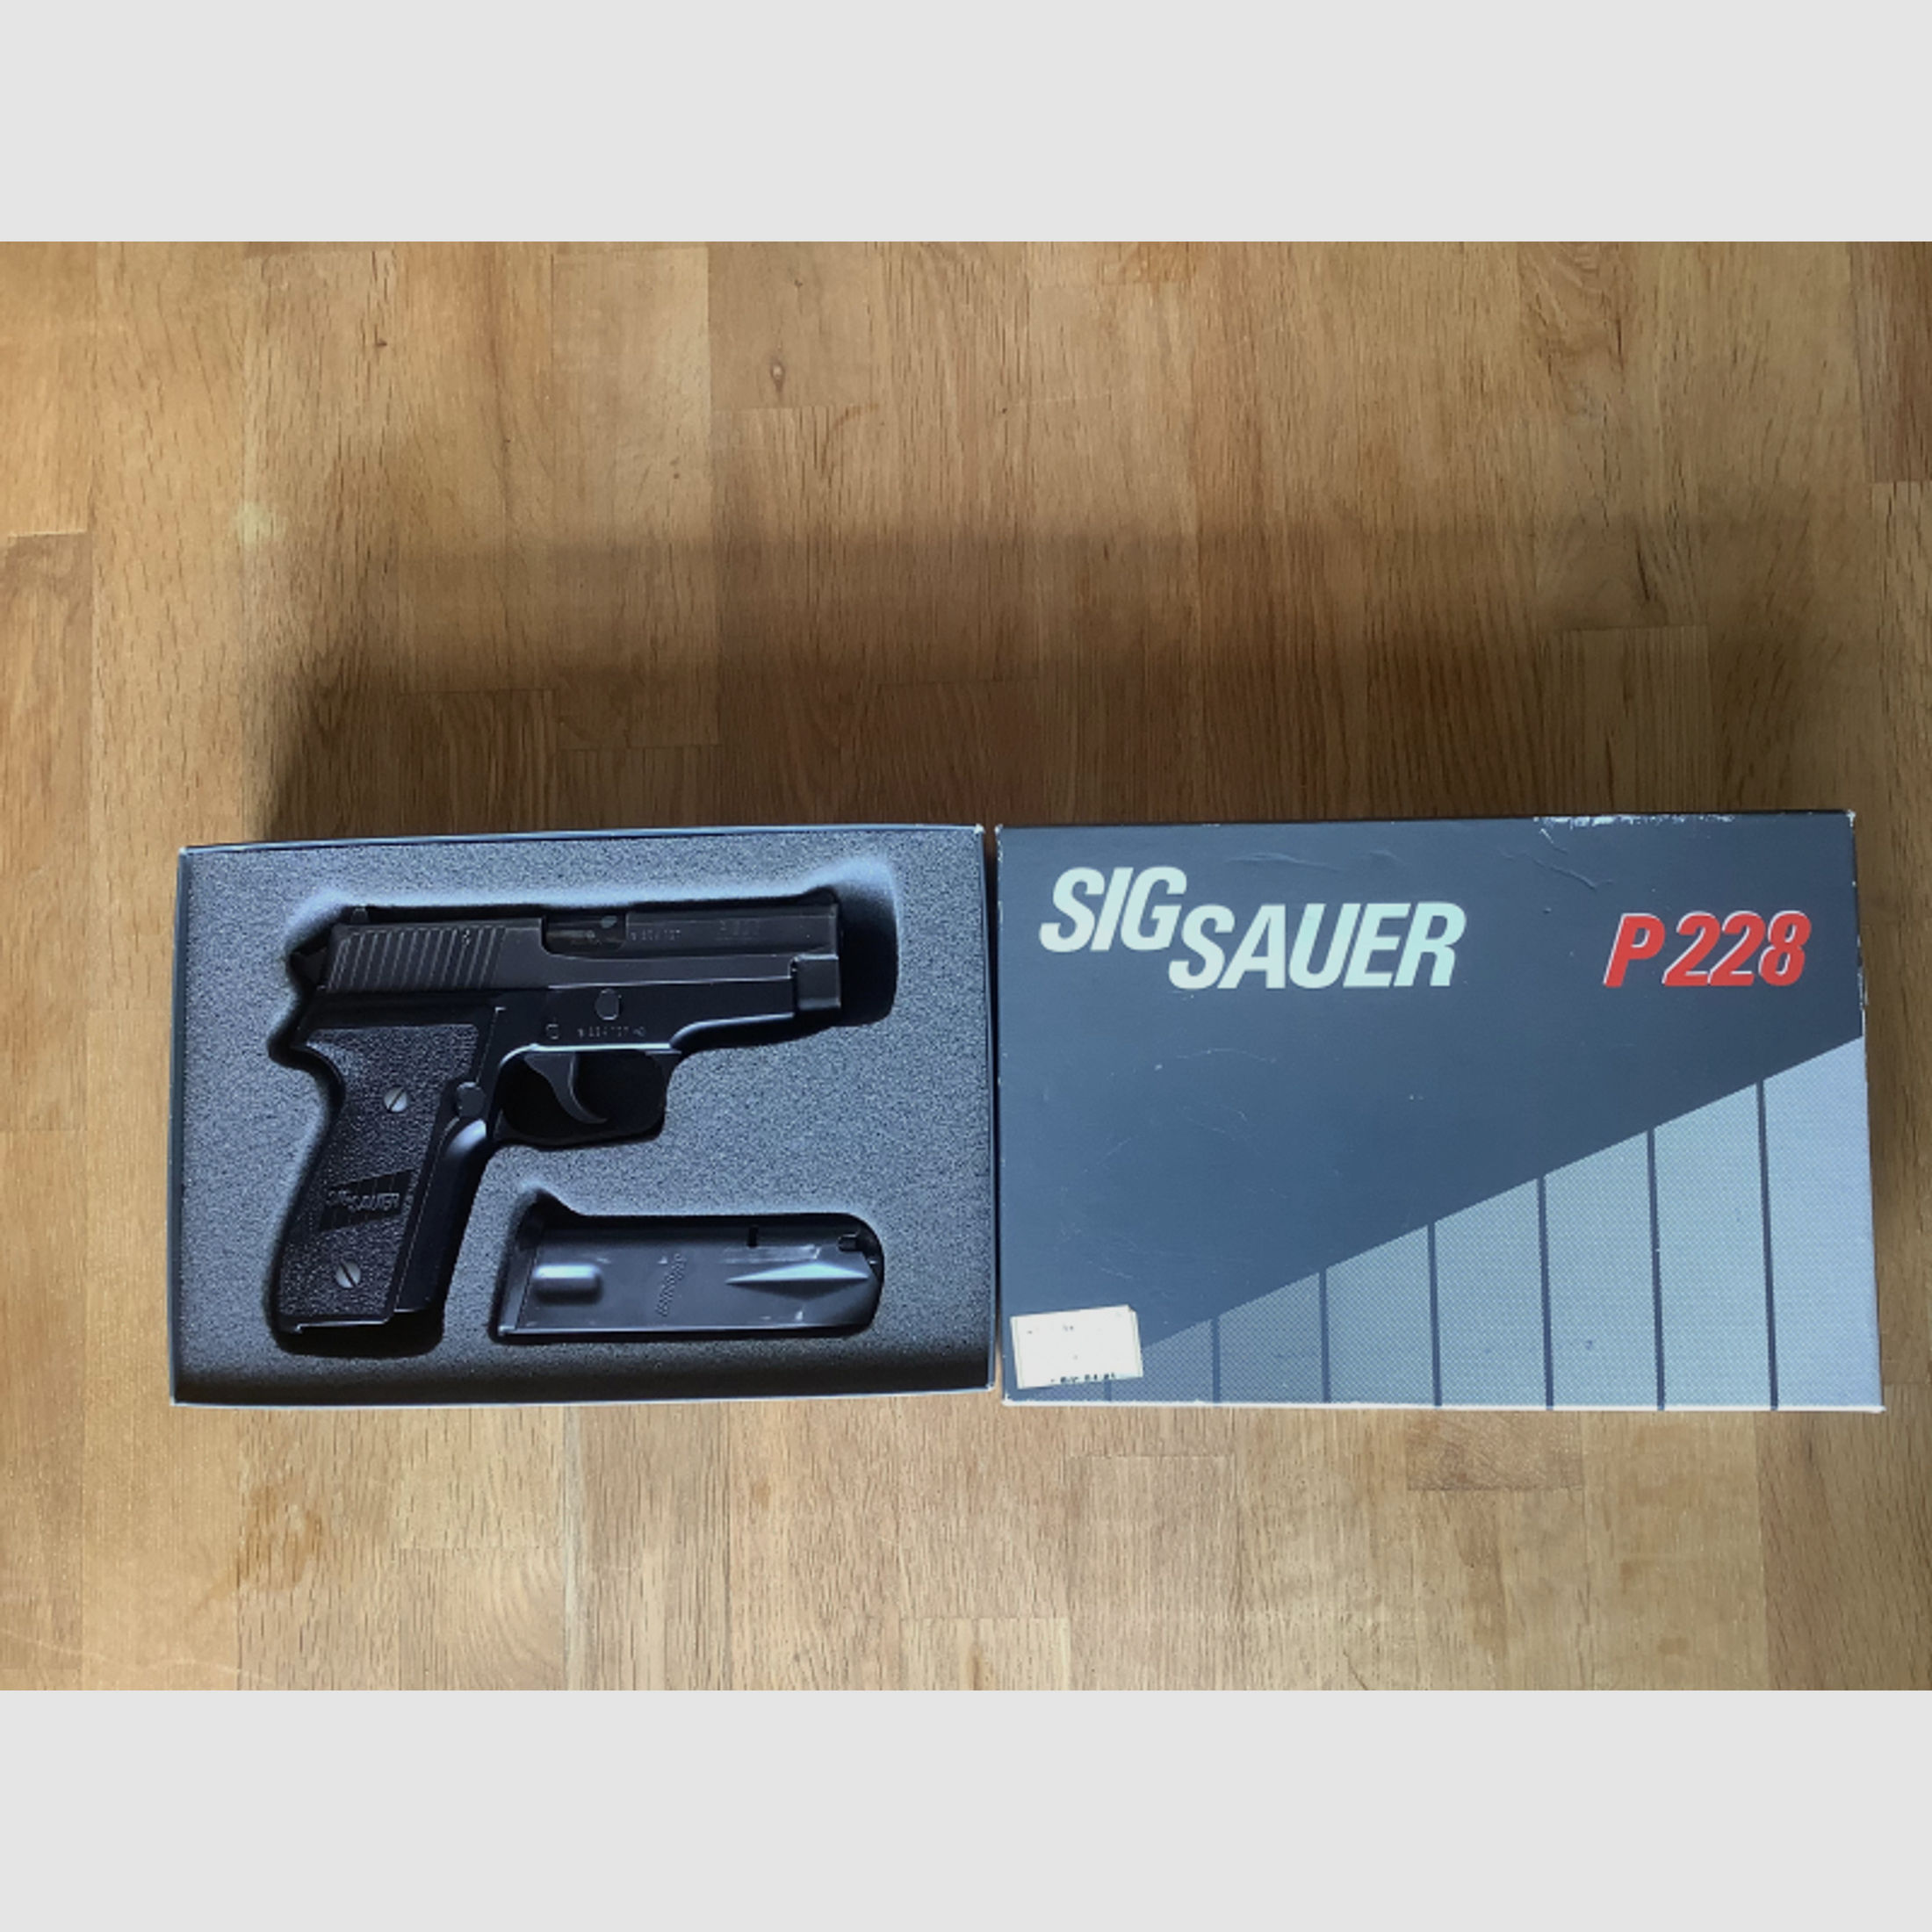 Pistole Sig Sauer P228 in 9mm Luger